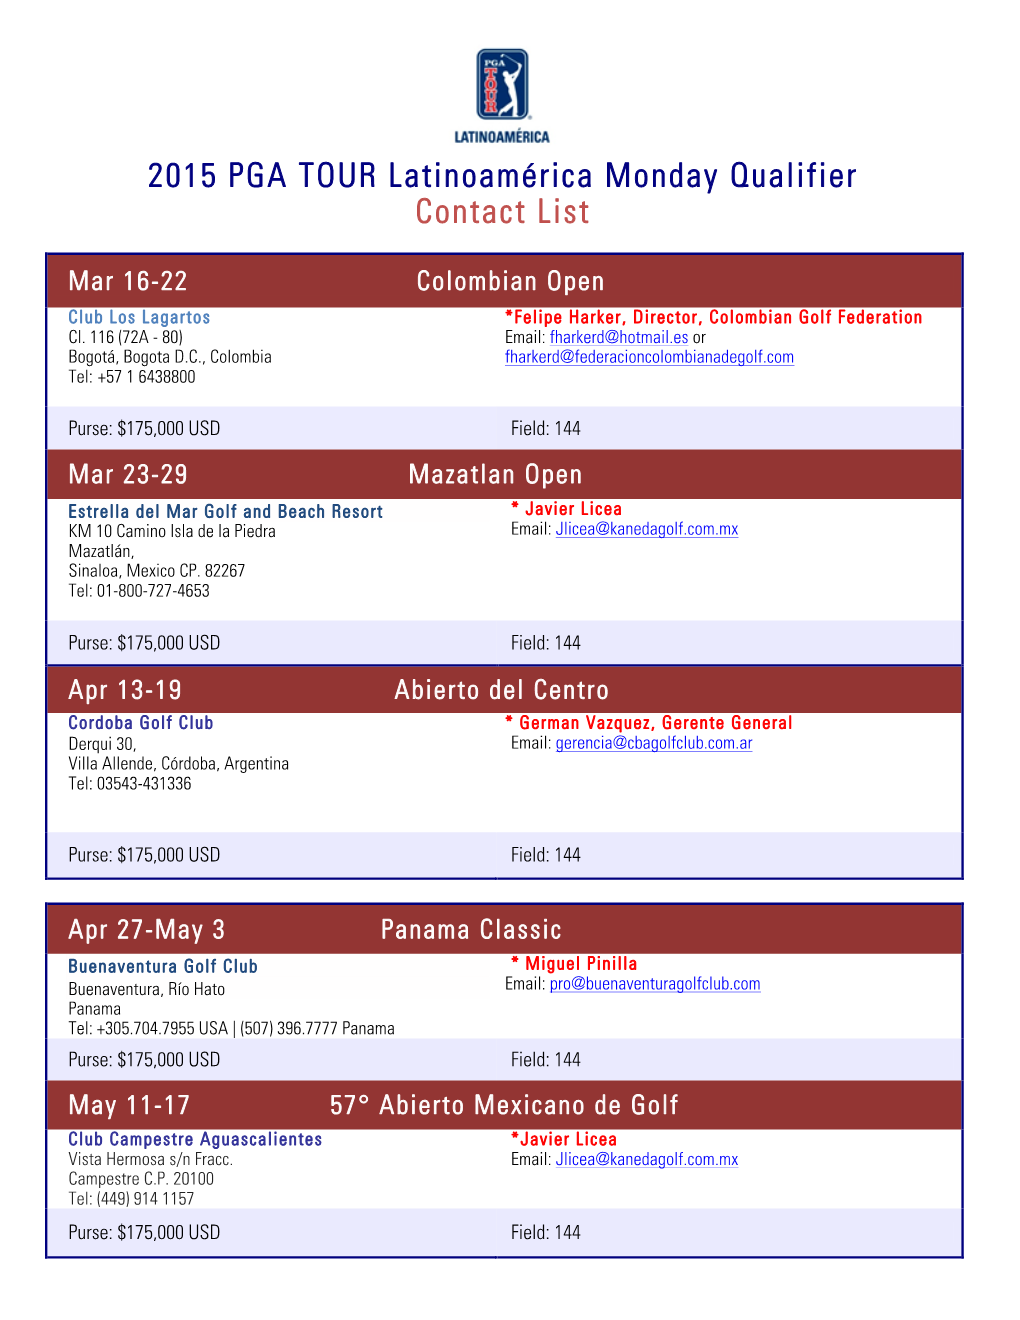 2015 PGA TOUR Latinoamérica Monday Qualifier Contact List